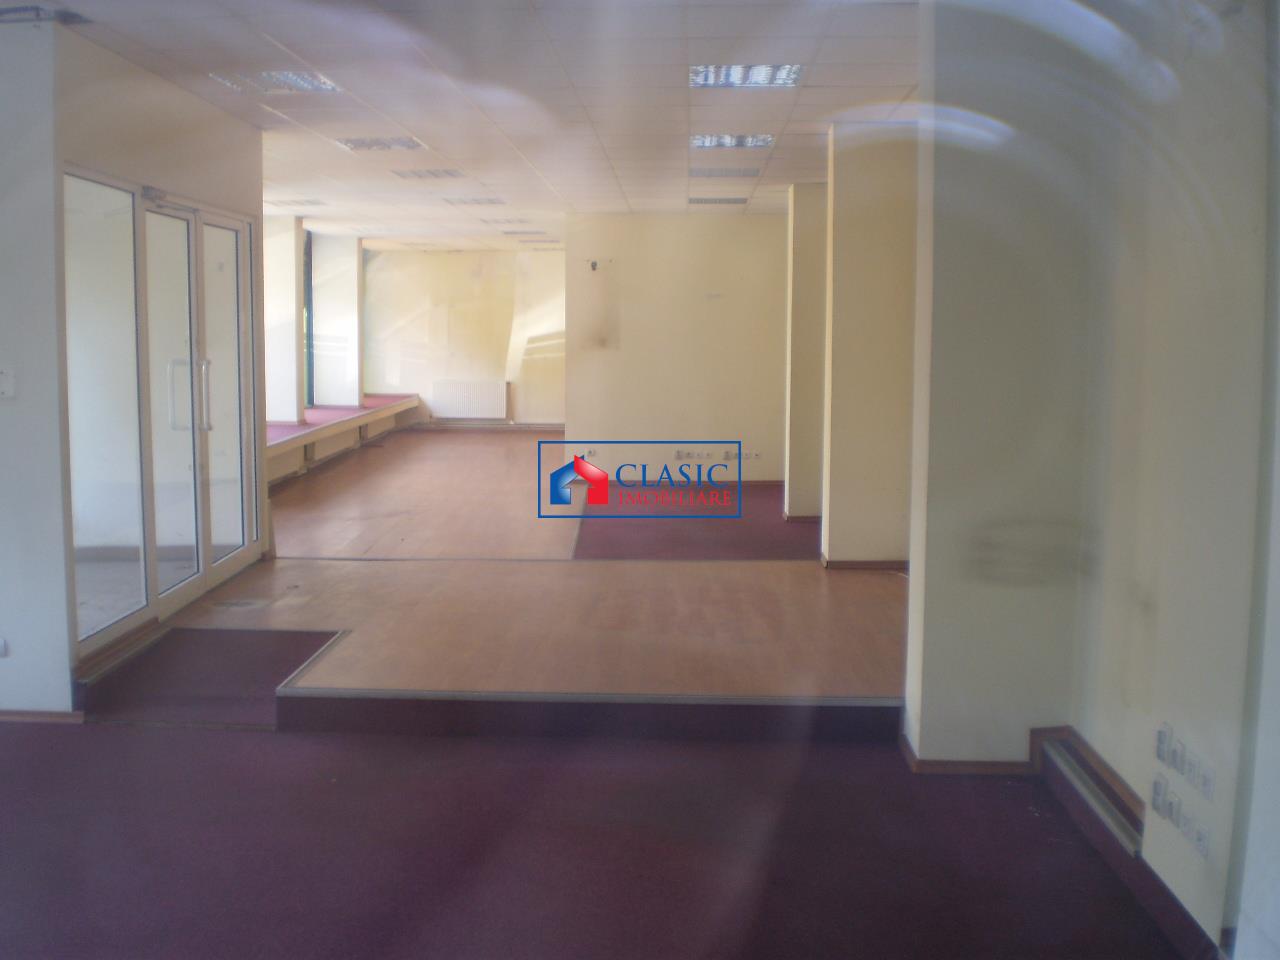 Inchiriere spatiu comercial sau birouri situat central, 300 mp, Cluj-Napoca